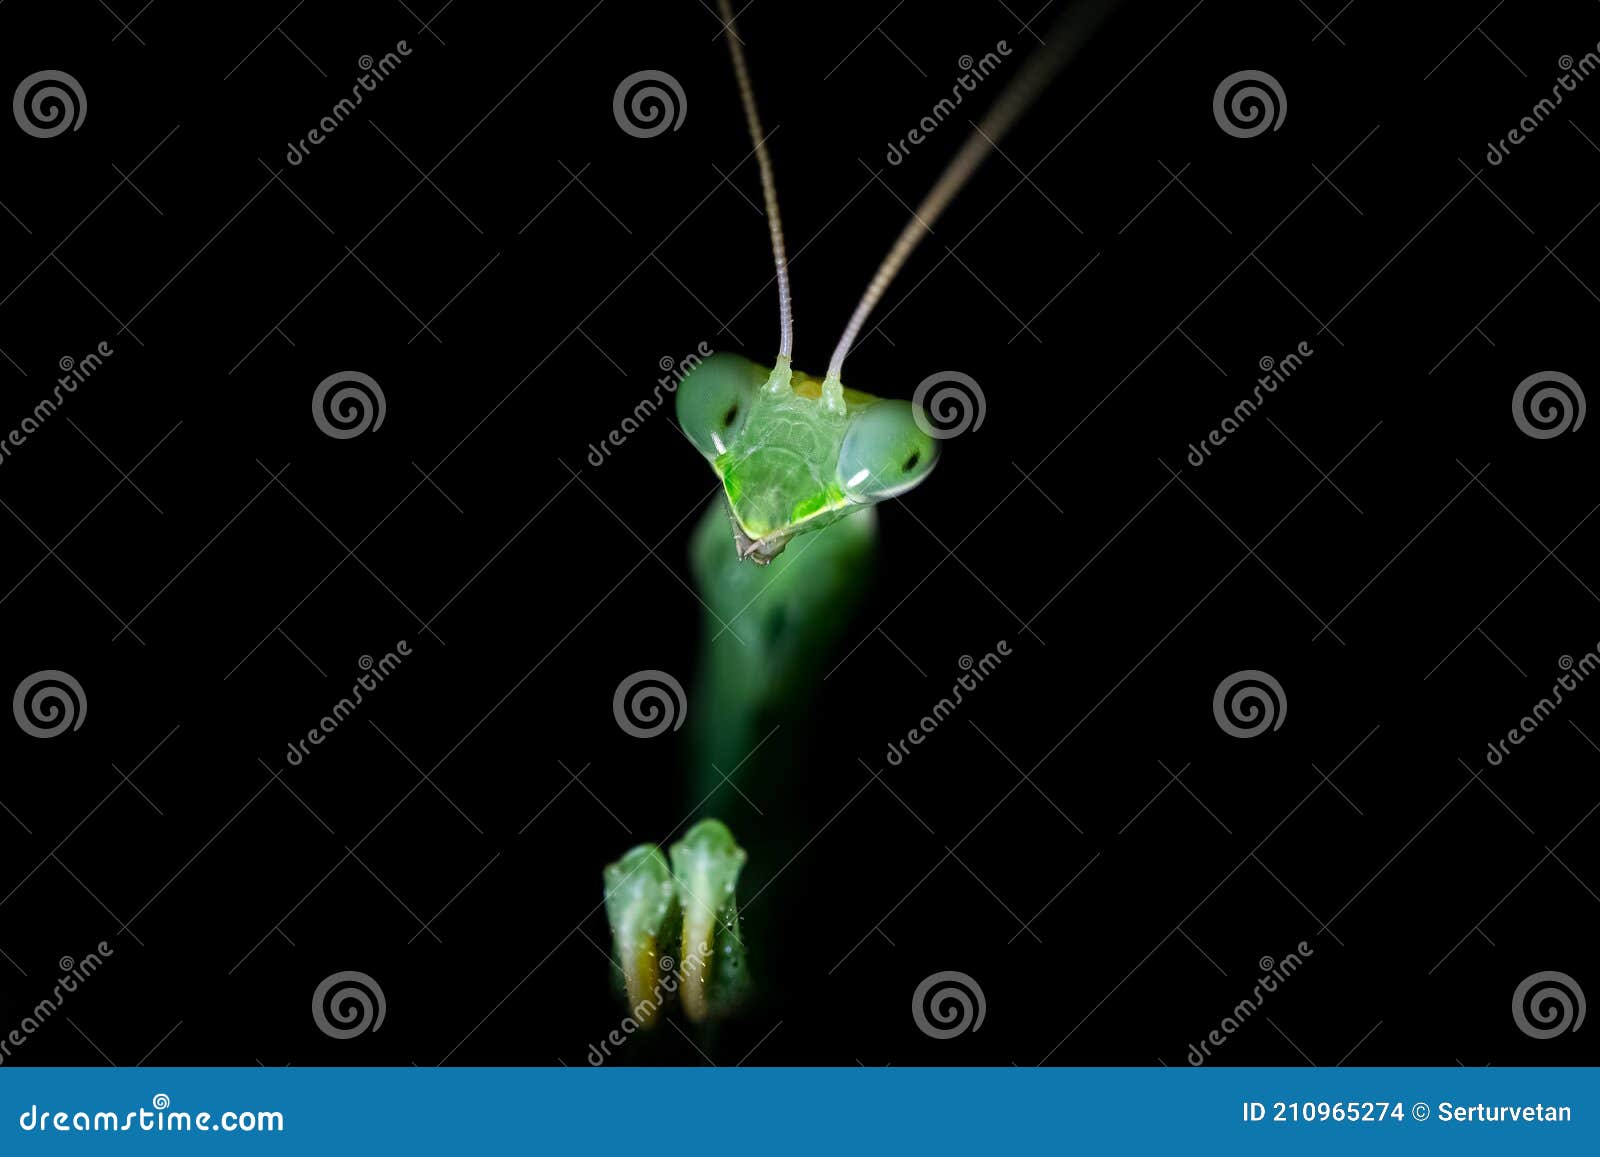 Close Up View A Praying Mantis In Night Mantis Religiosa Stock Photo